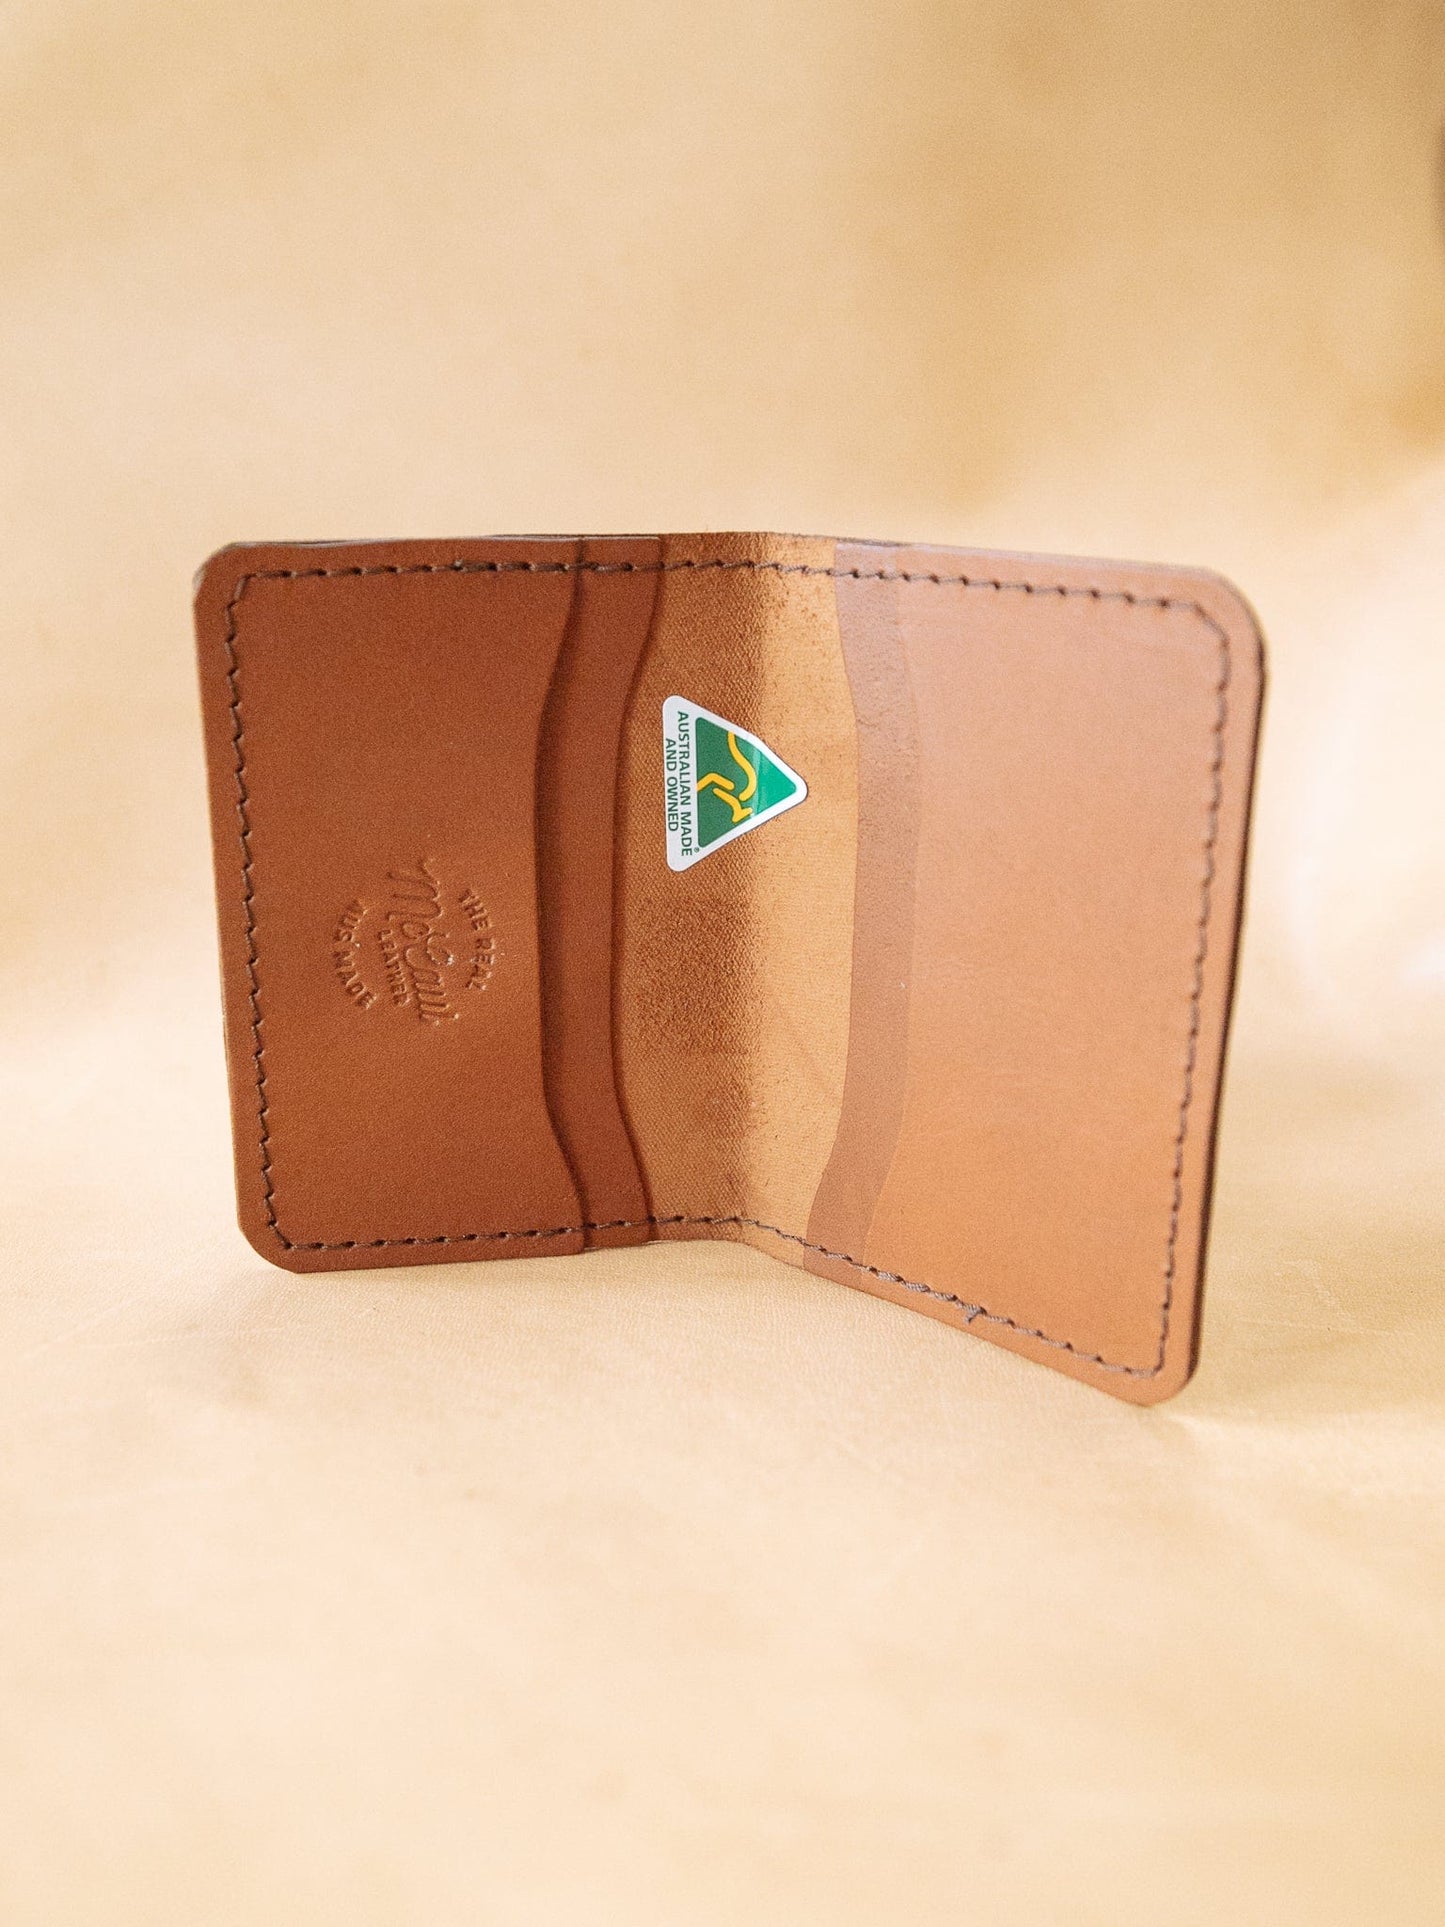 The Real McCaul Leathergoods Wallets Tan Four Pocket Card Wallet Australian Made Australian Owned Leather 2 Card Wallet Holder Made In Australia 